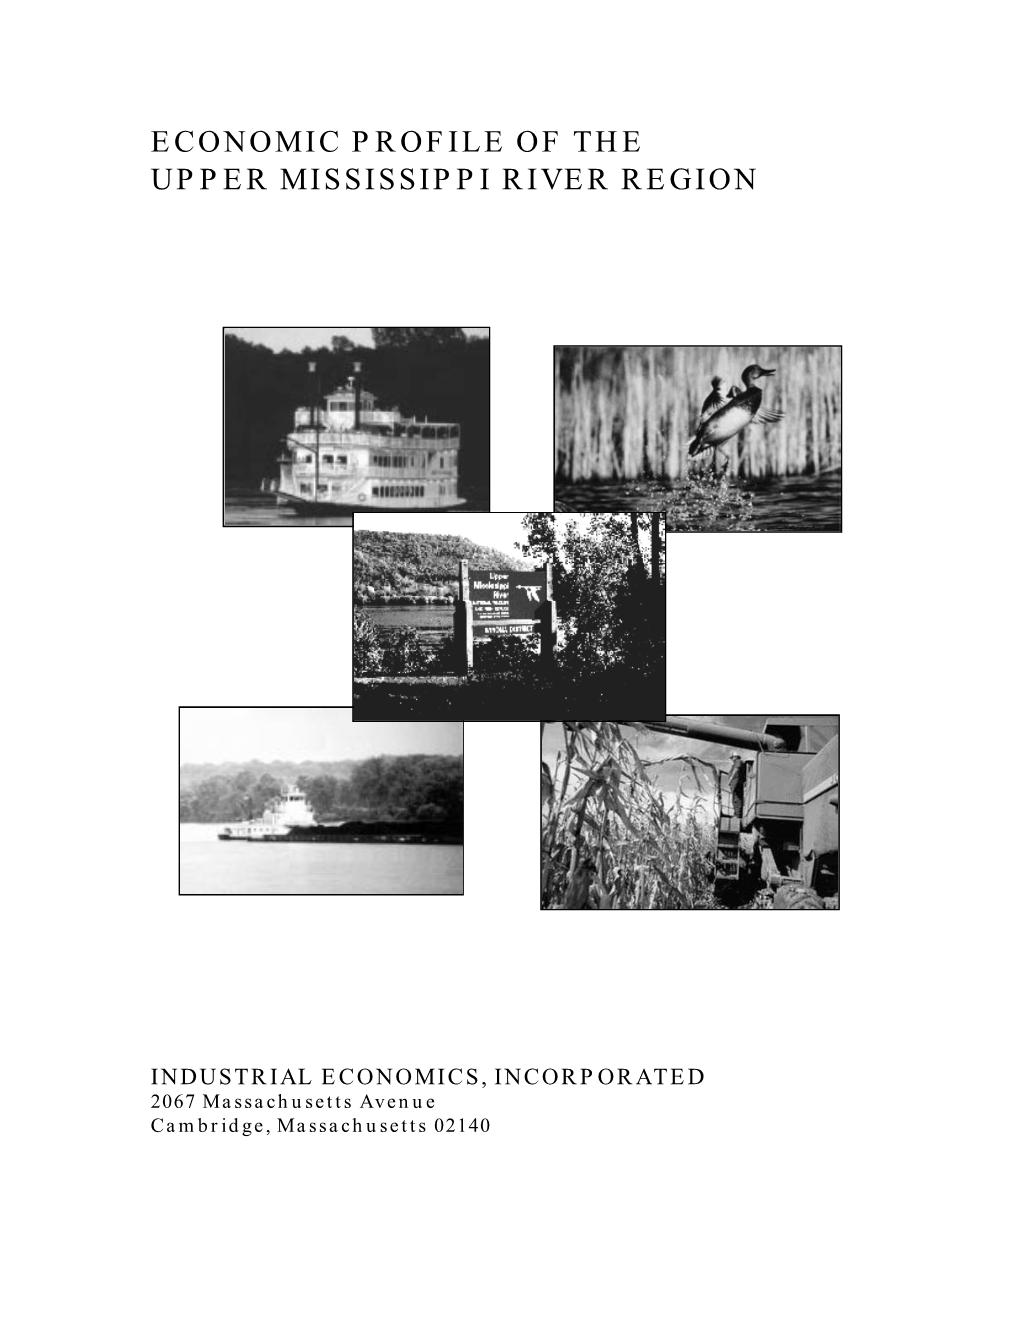 Economic Profile of the Upper Mississippi River Region